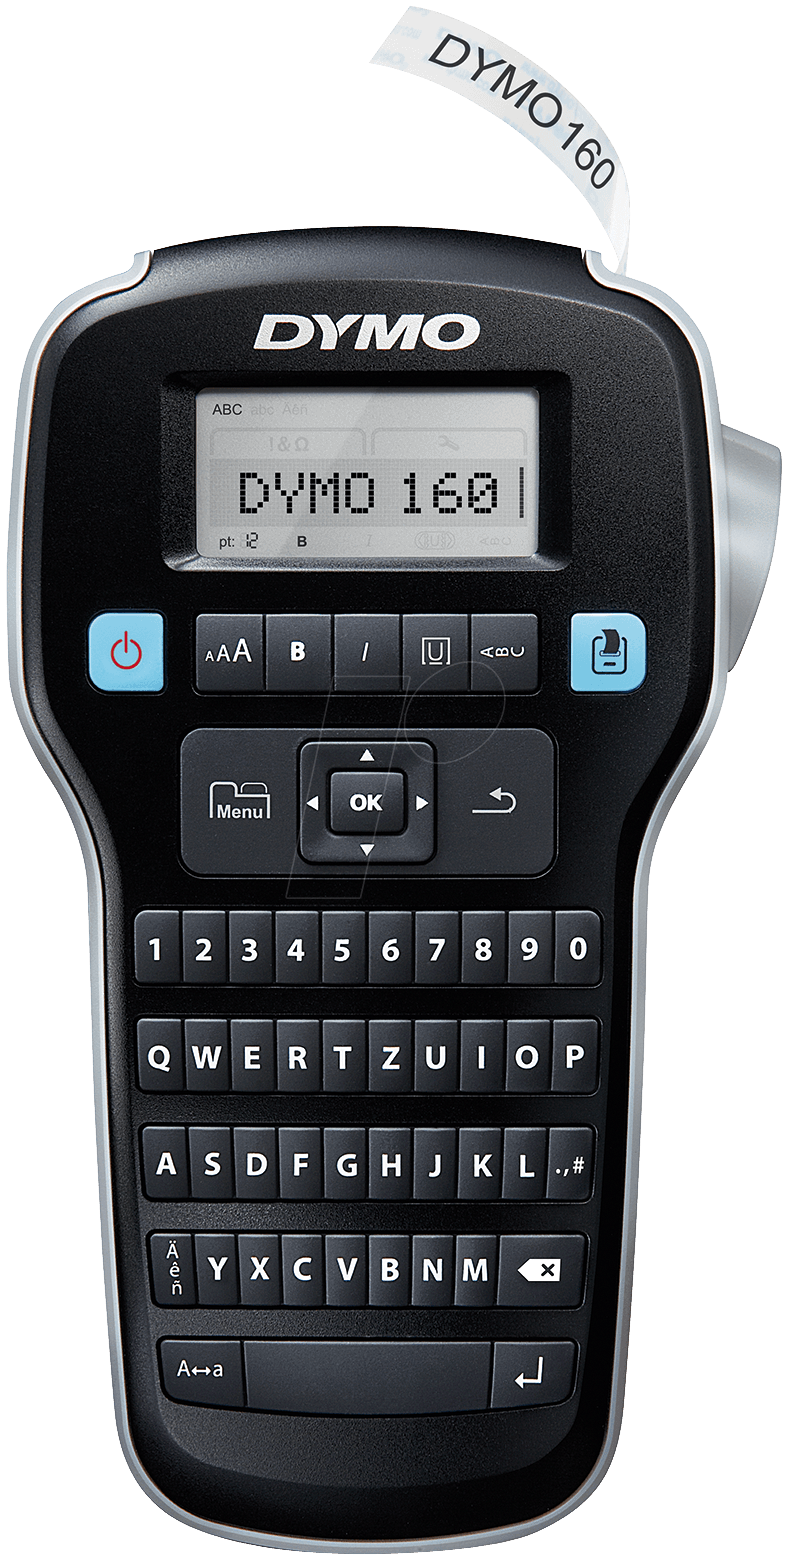 DYMO LM 160 VP - DYMO Beschriftungsgerät / Tragbar von Dymo